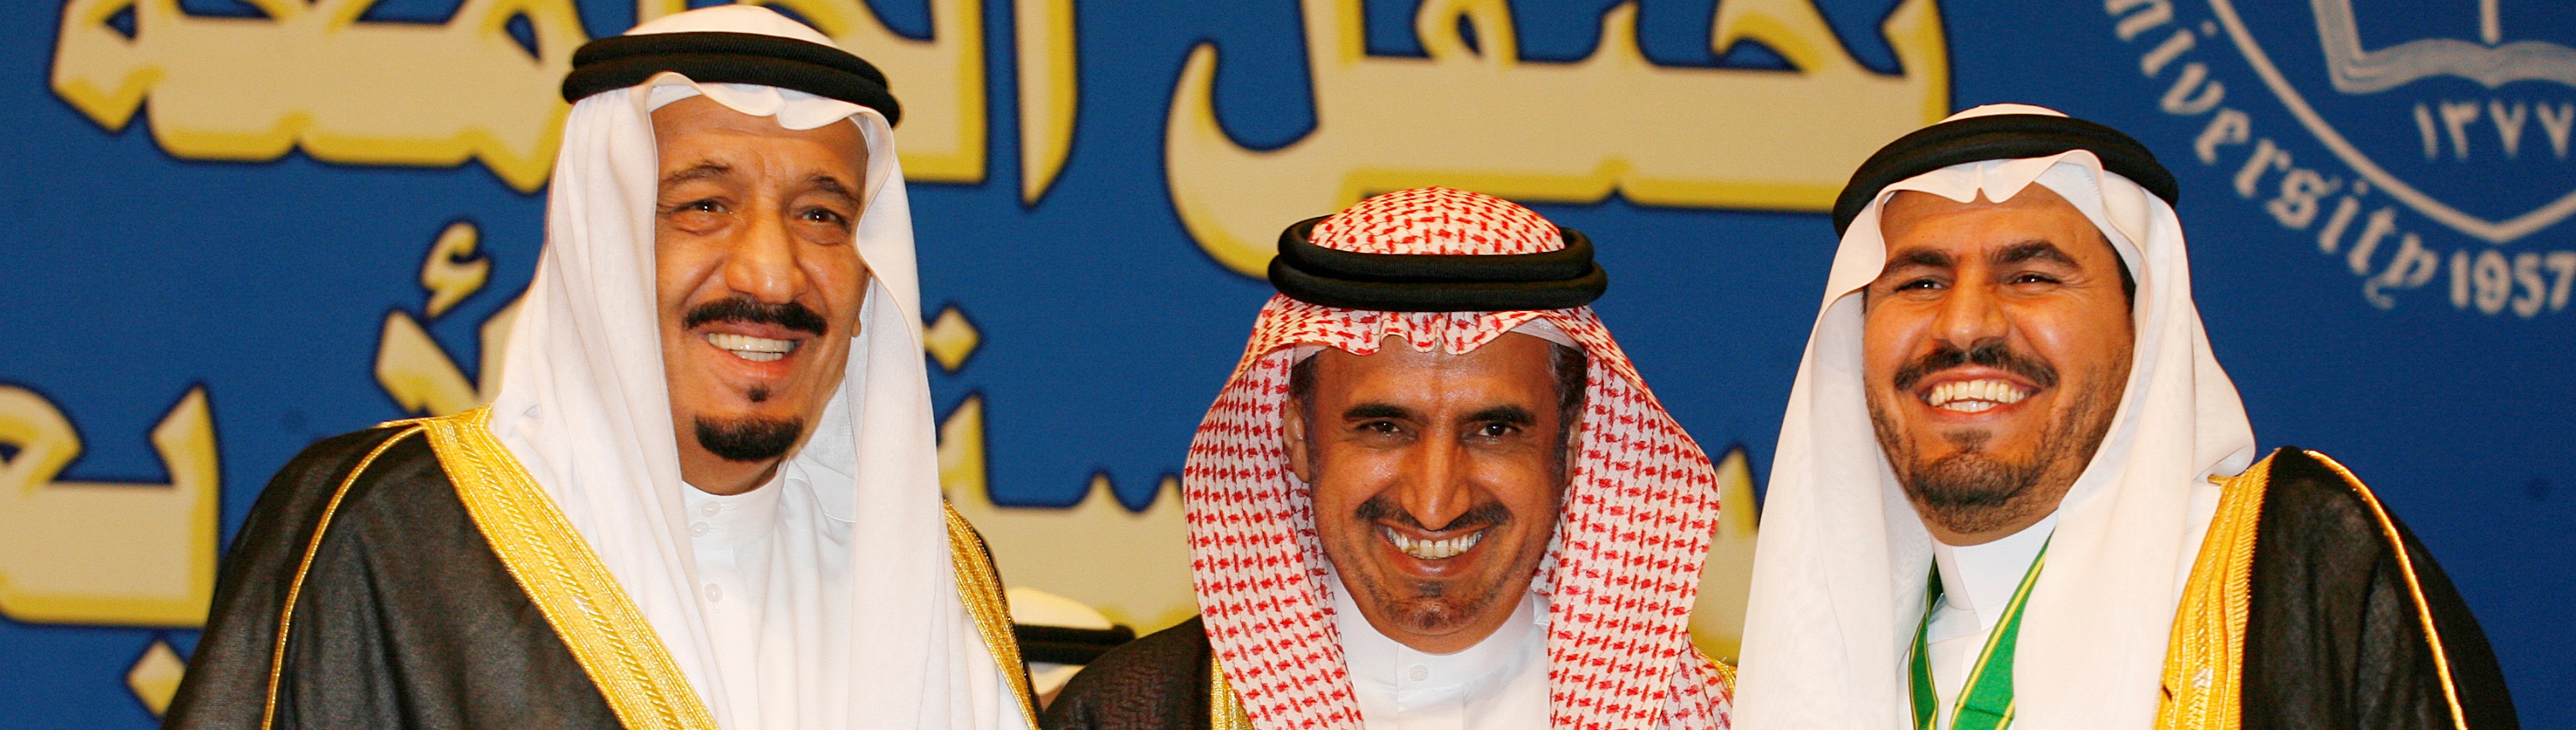 Receiving award from King Salman - Receiving award from King Salman